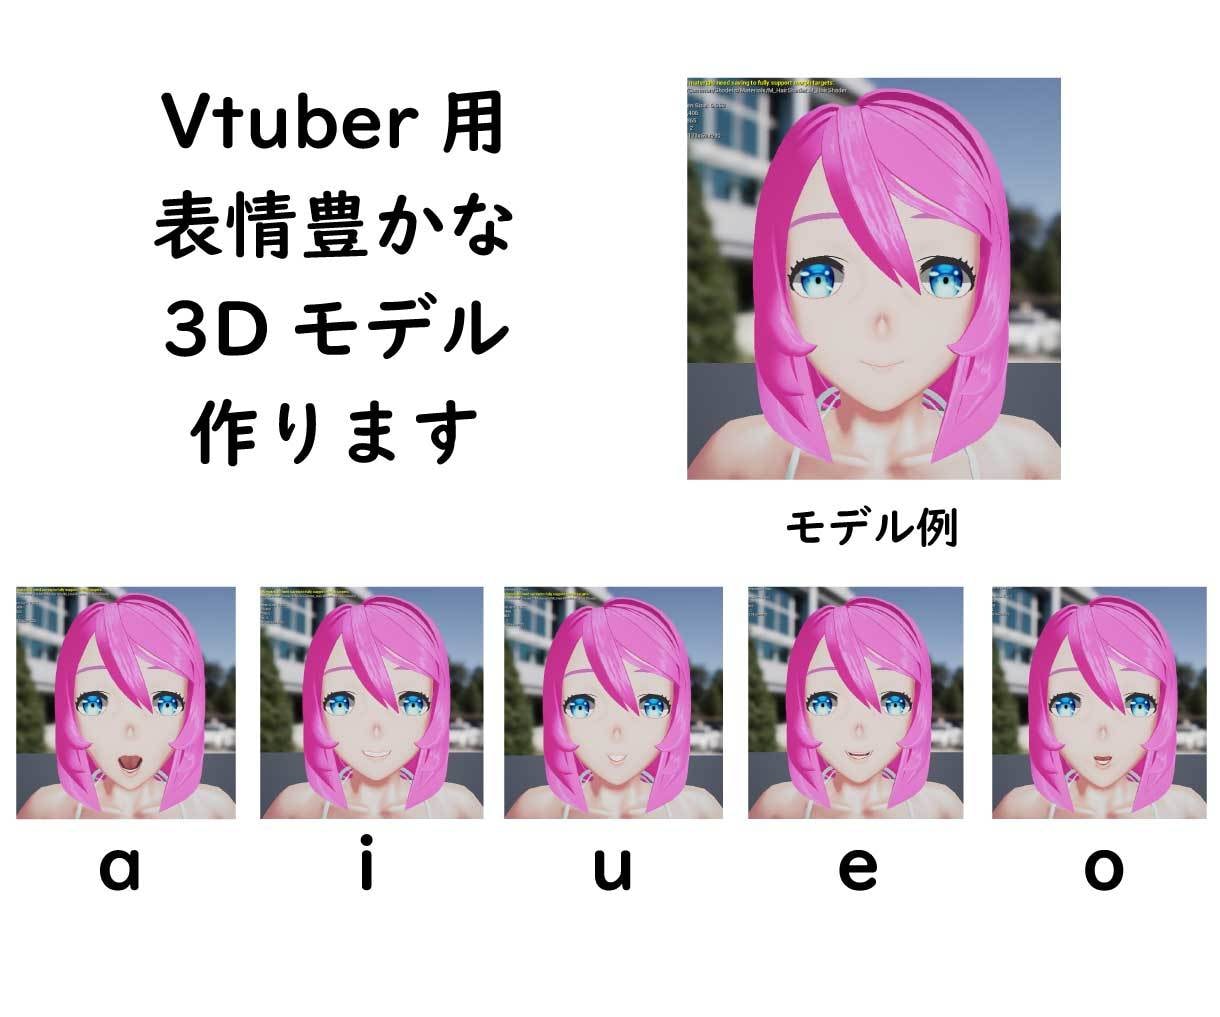 Vtuber用の表情豊かな3Dモデルを作ります パーフェクトシンク対応 + ご希望の表情で3Dモデル作ります イメージ1